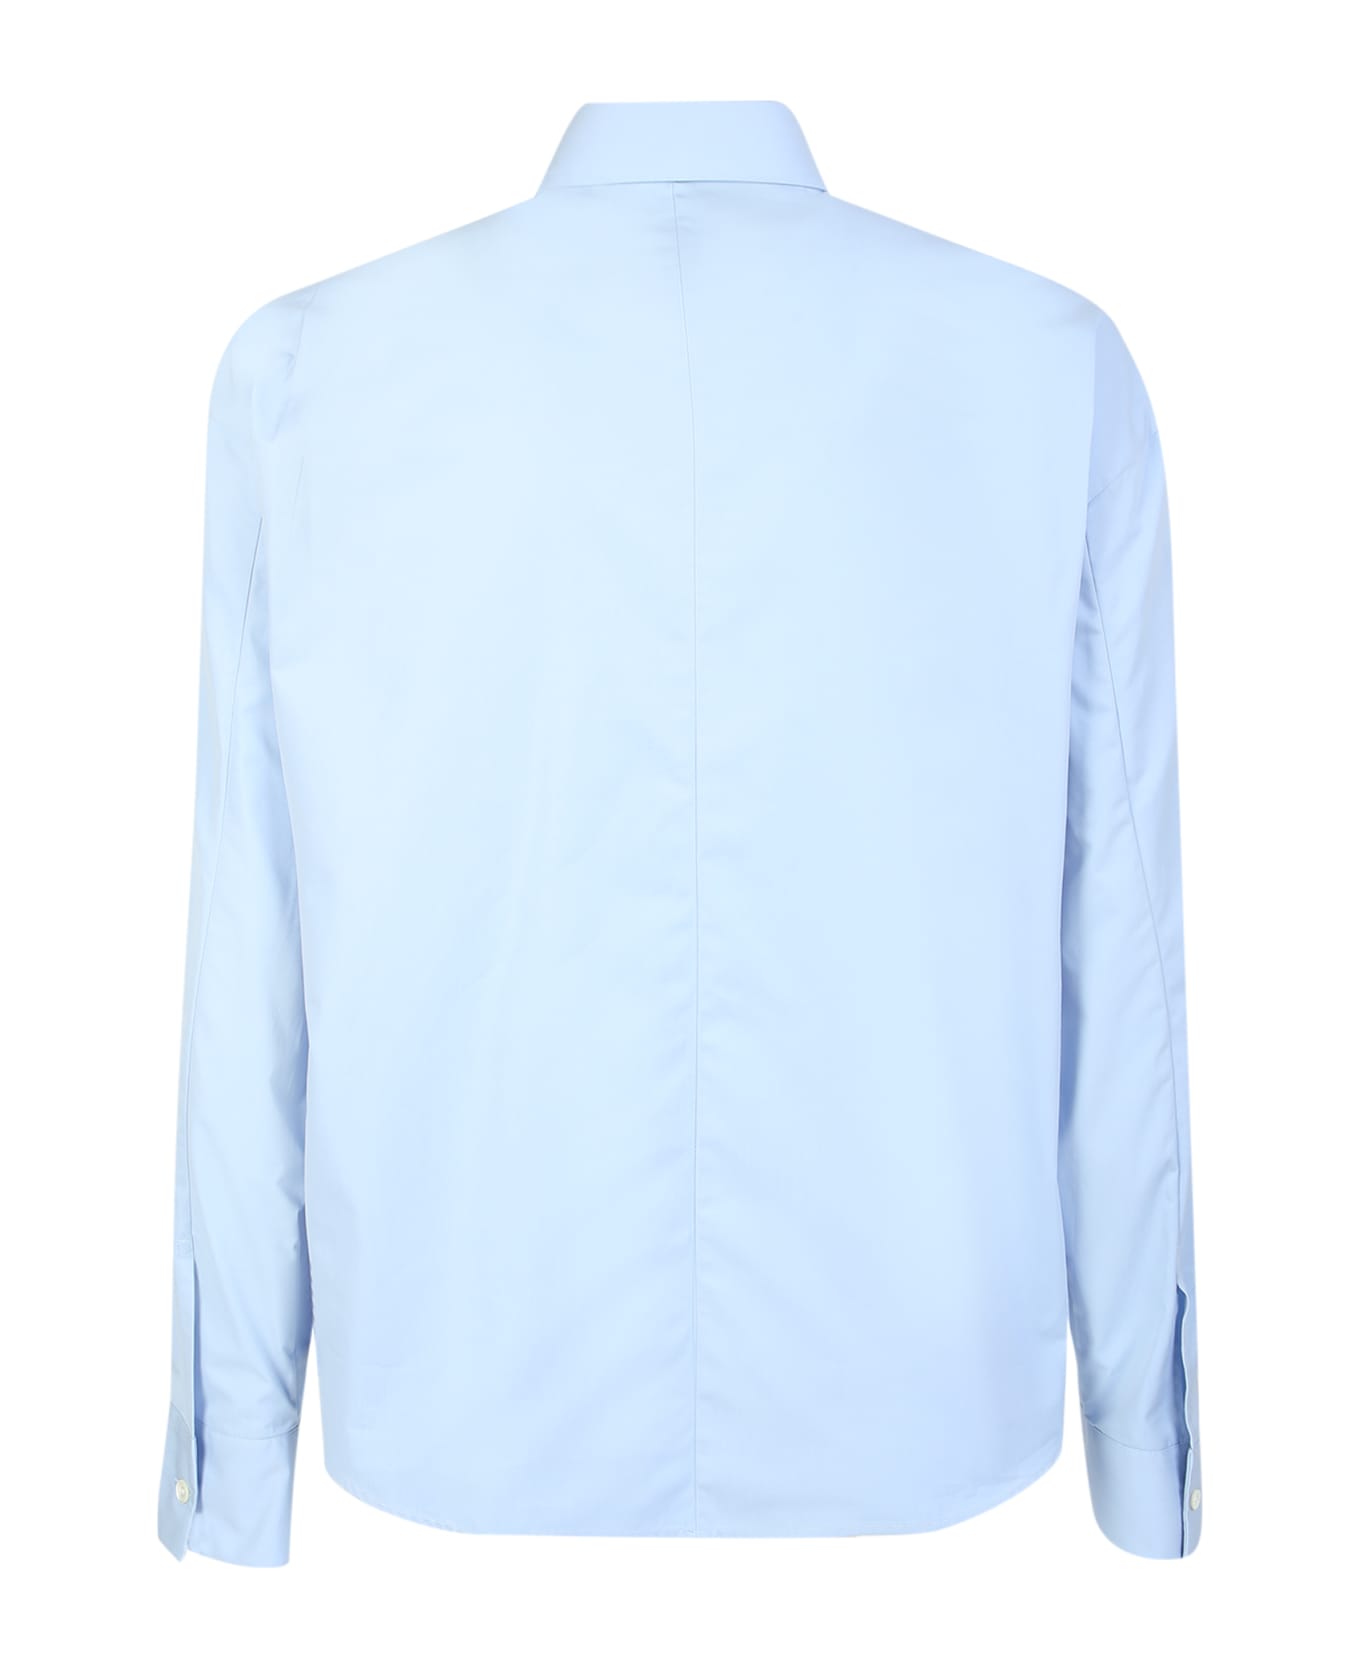 Valentino Shirt - Blue